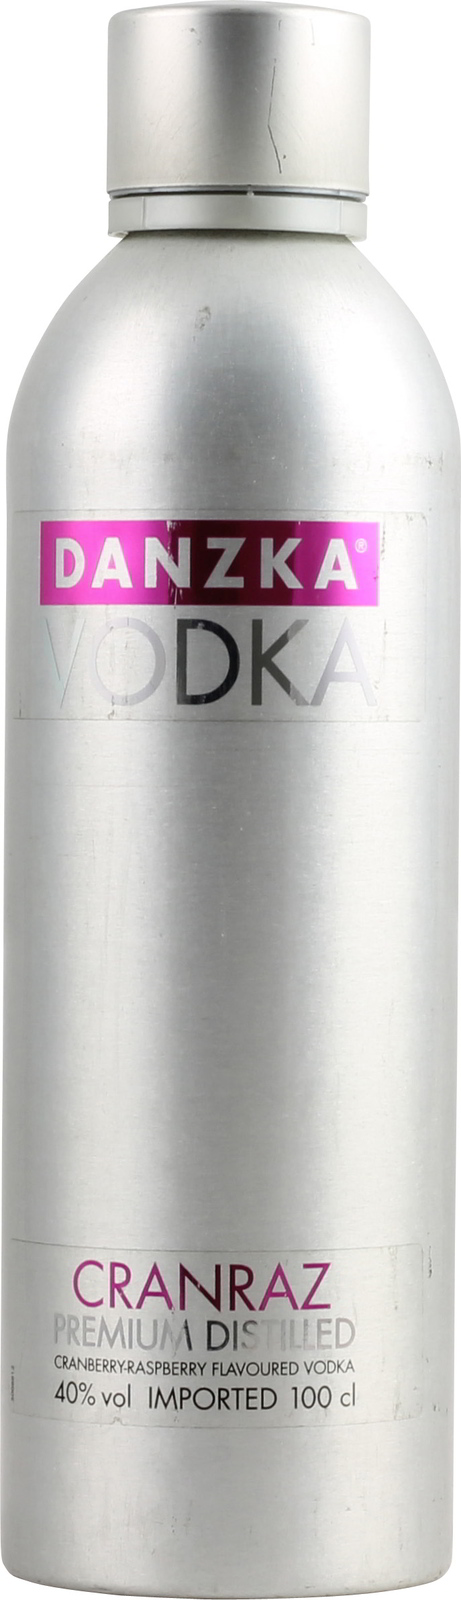 kaufen aus Vodka Dänemark im Danzka Shop Cranraz